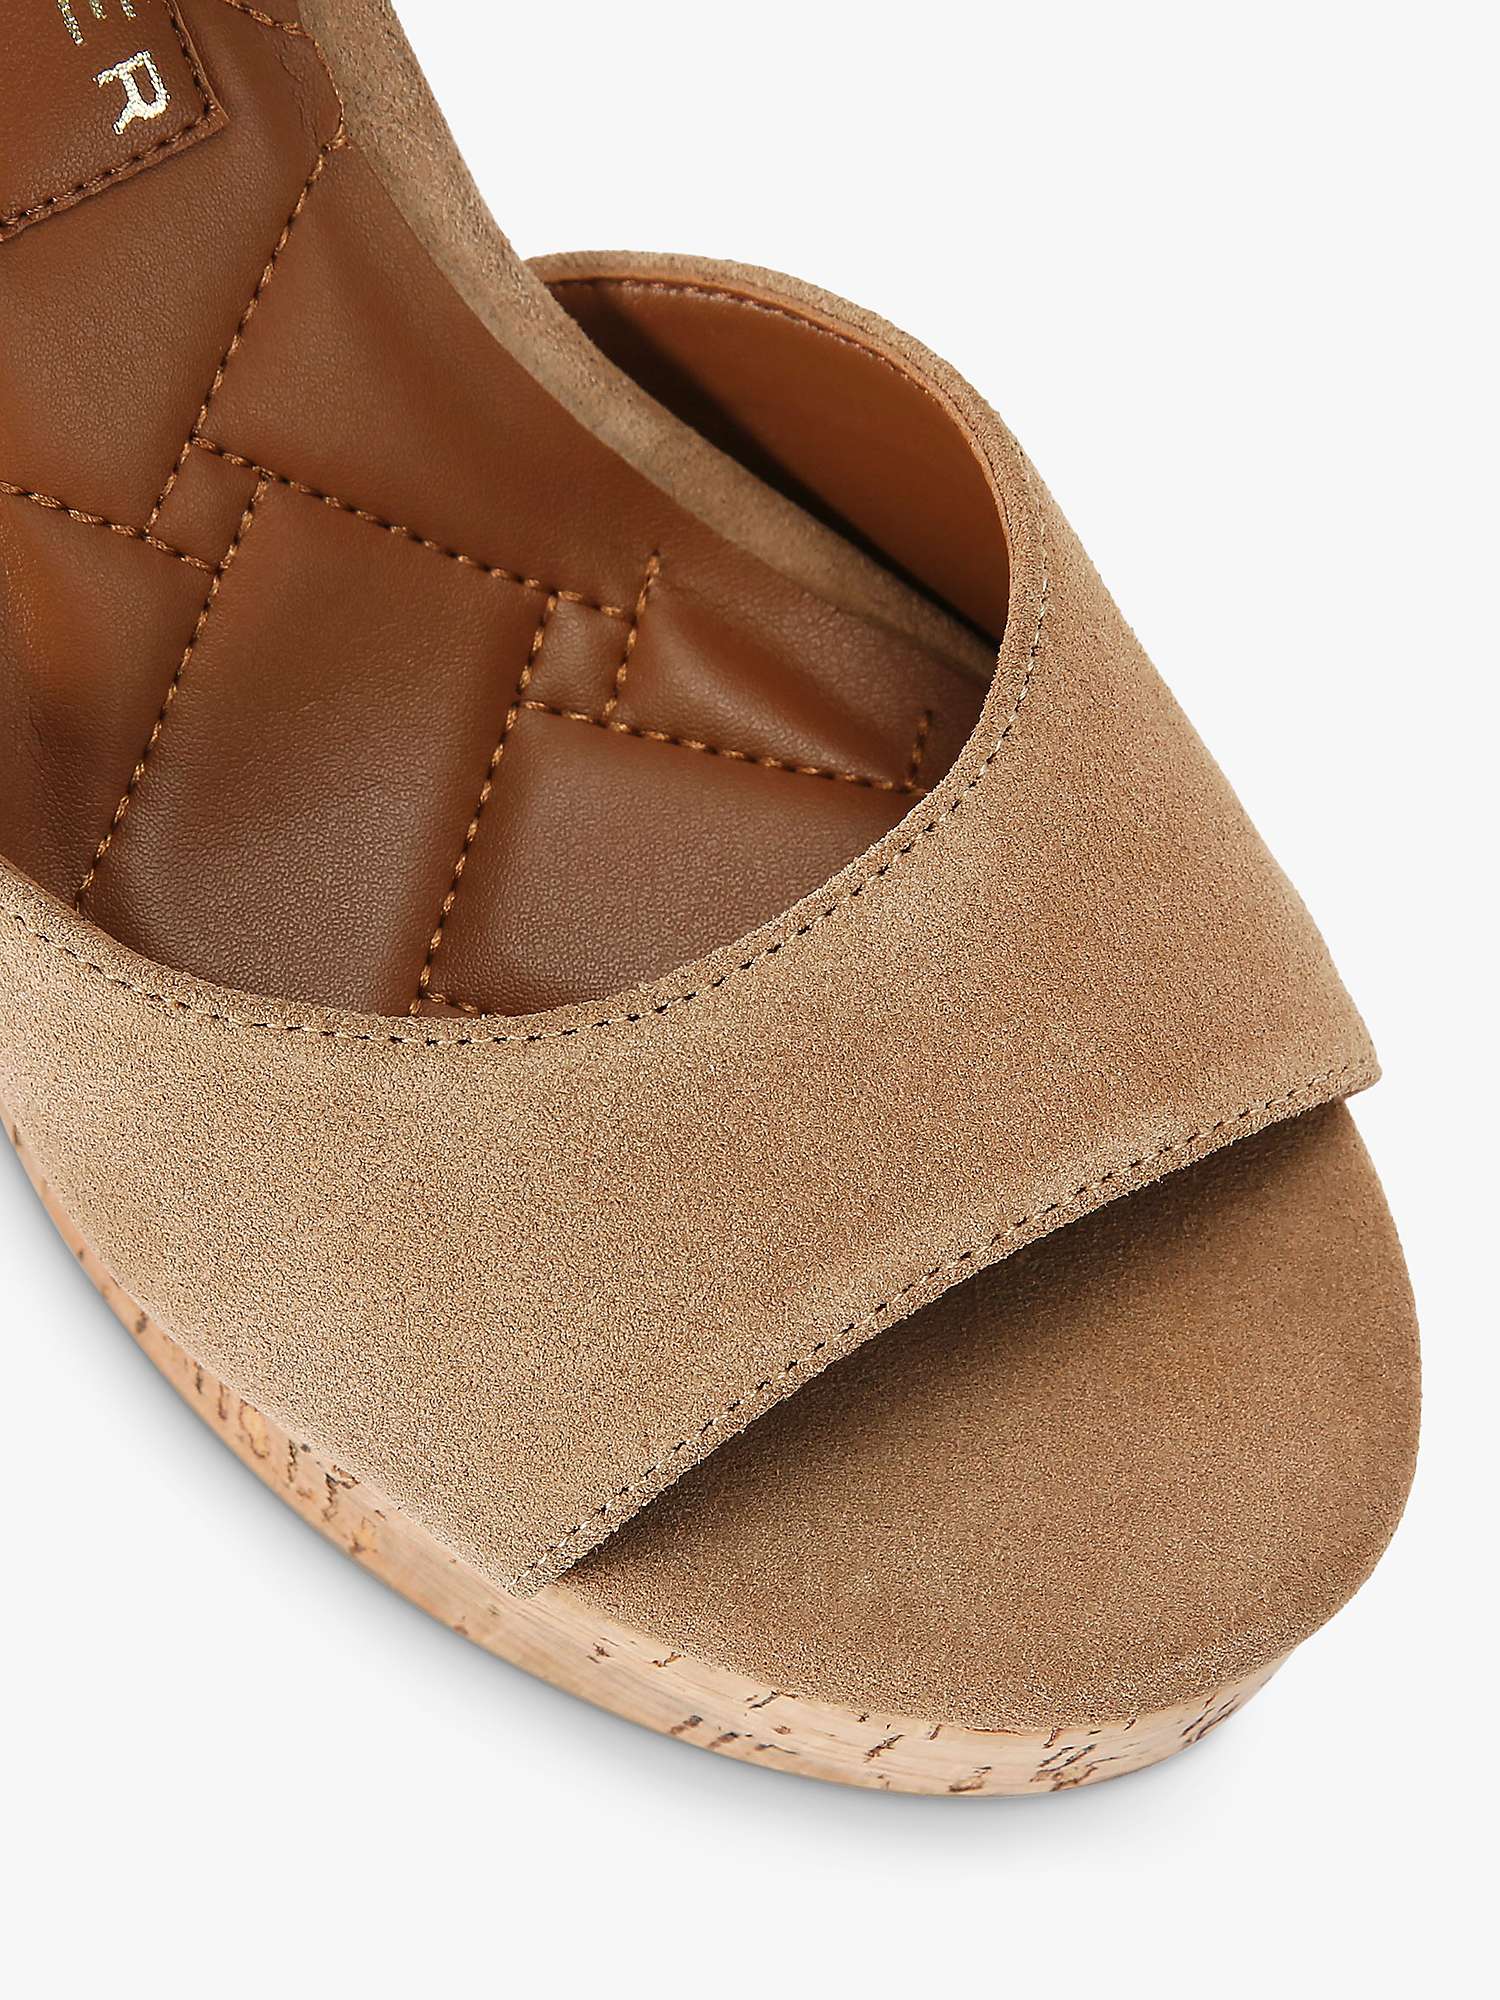 Buy Kurt Geiger London Mayfair Cork Heel Sandals Online at johnlewis.com